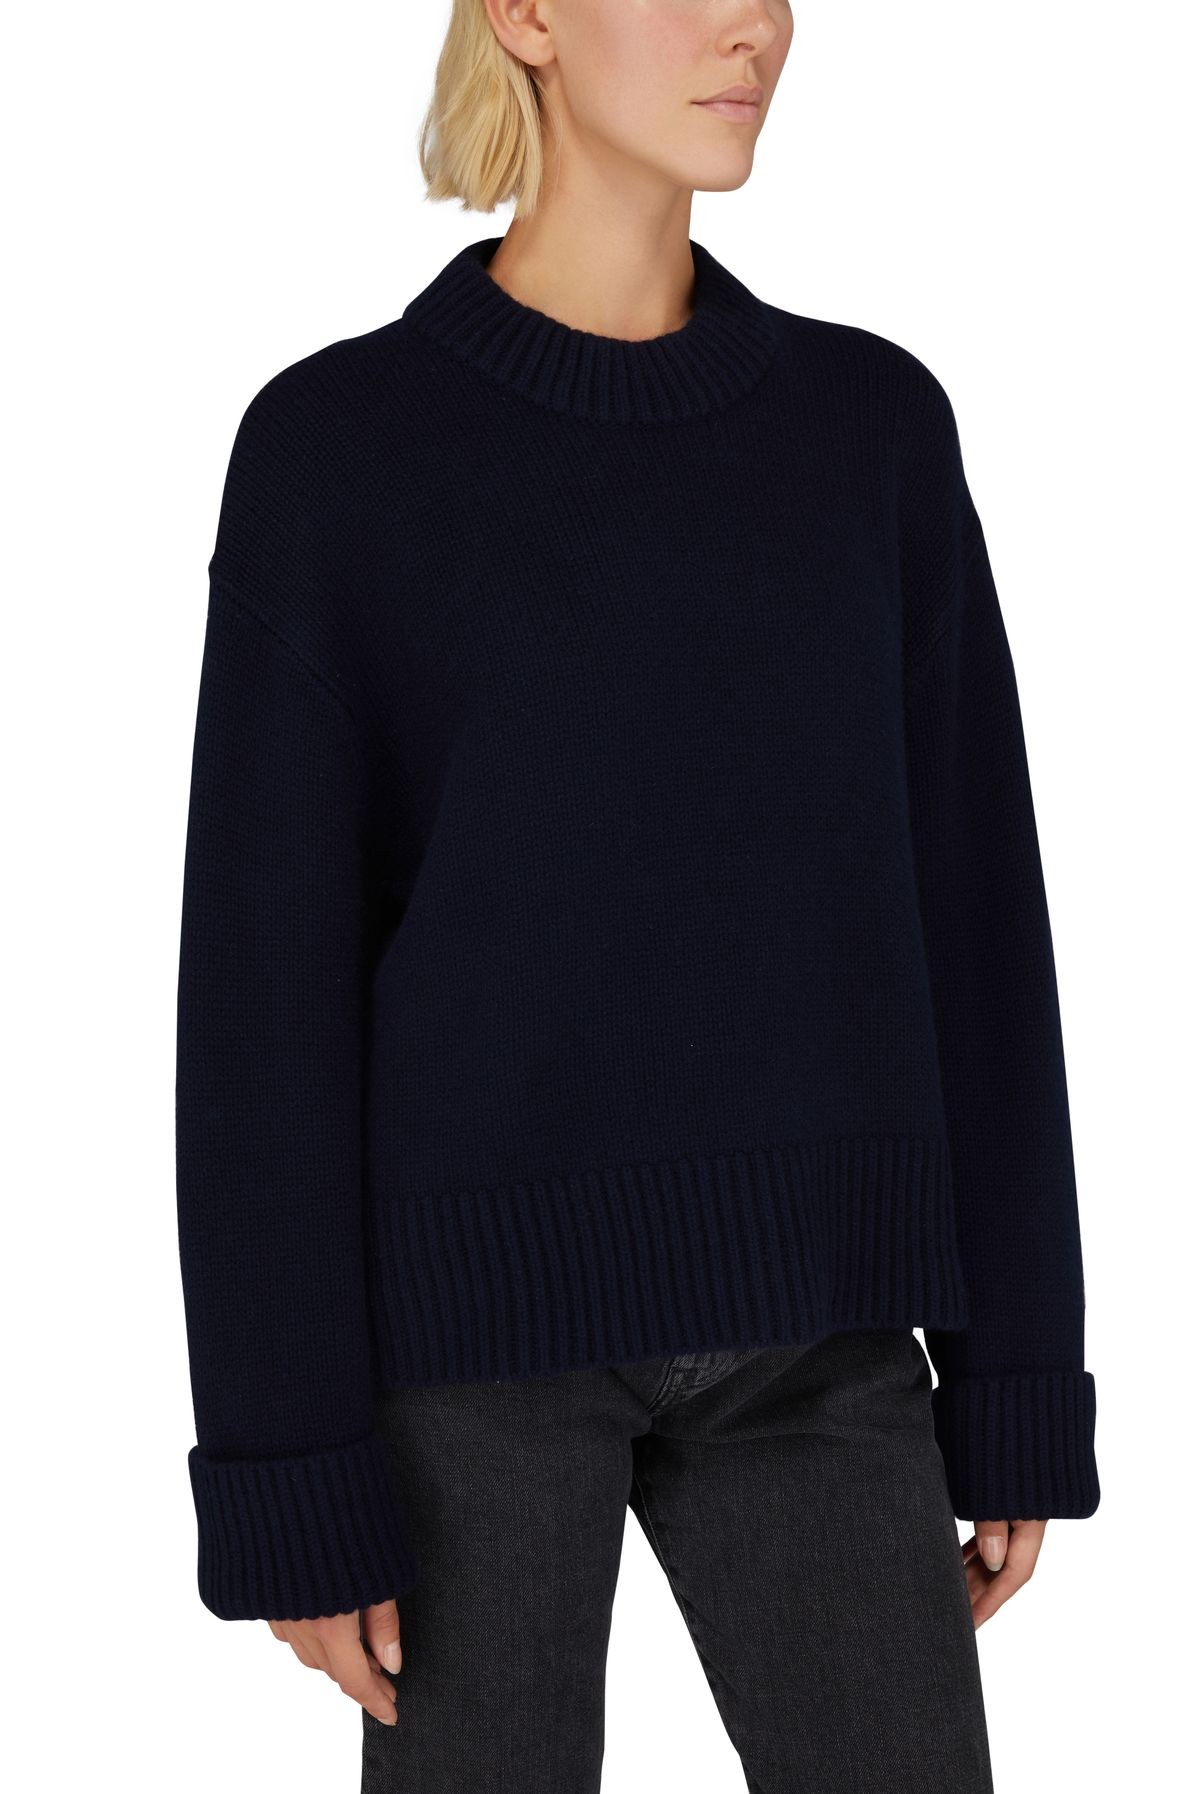 Lisa Yang Sony cashmere round-neck sweater